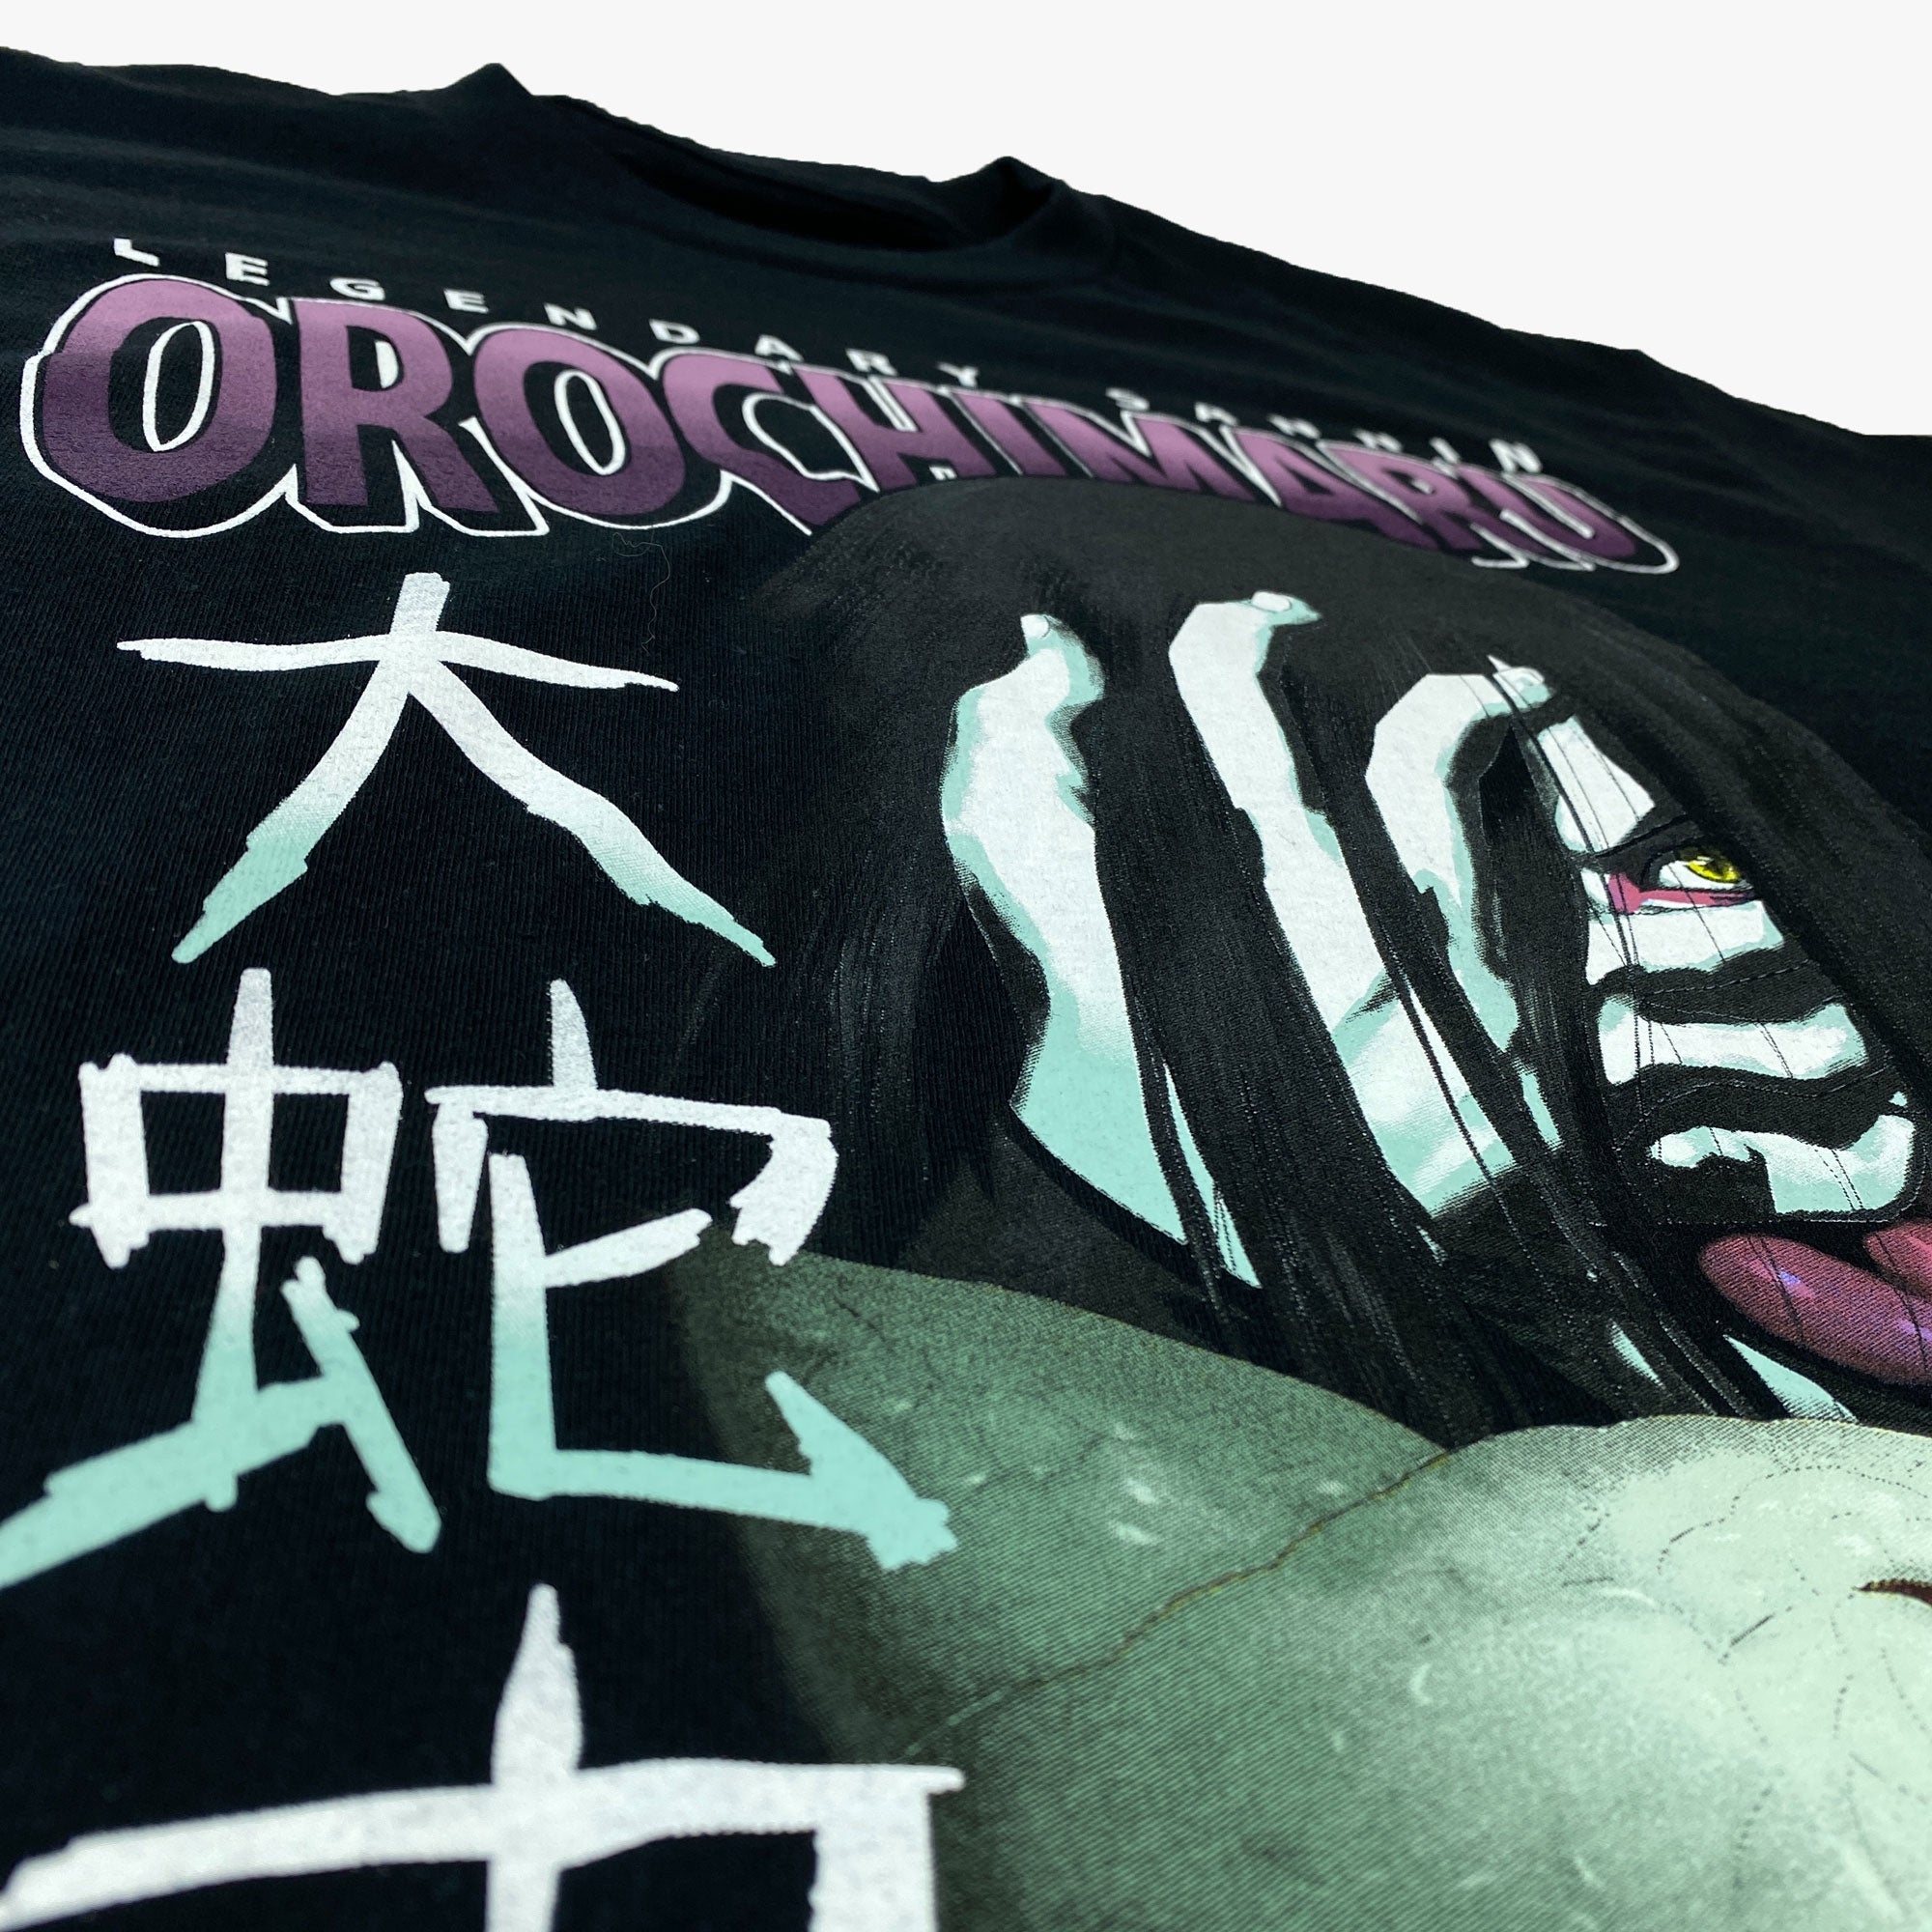 Naruto Shippuden - Orochimaru Legendary Sannin T-Shirt - Crunchyroll Exclusive! image count 1